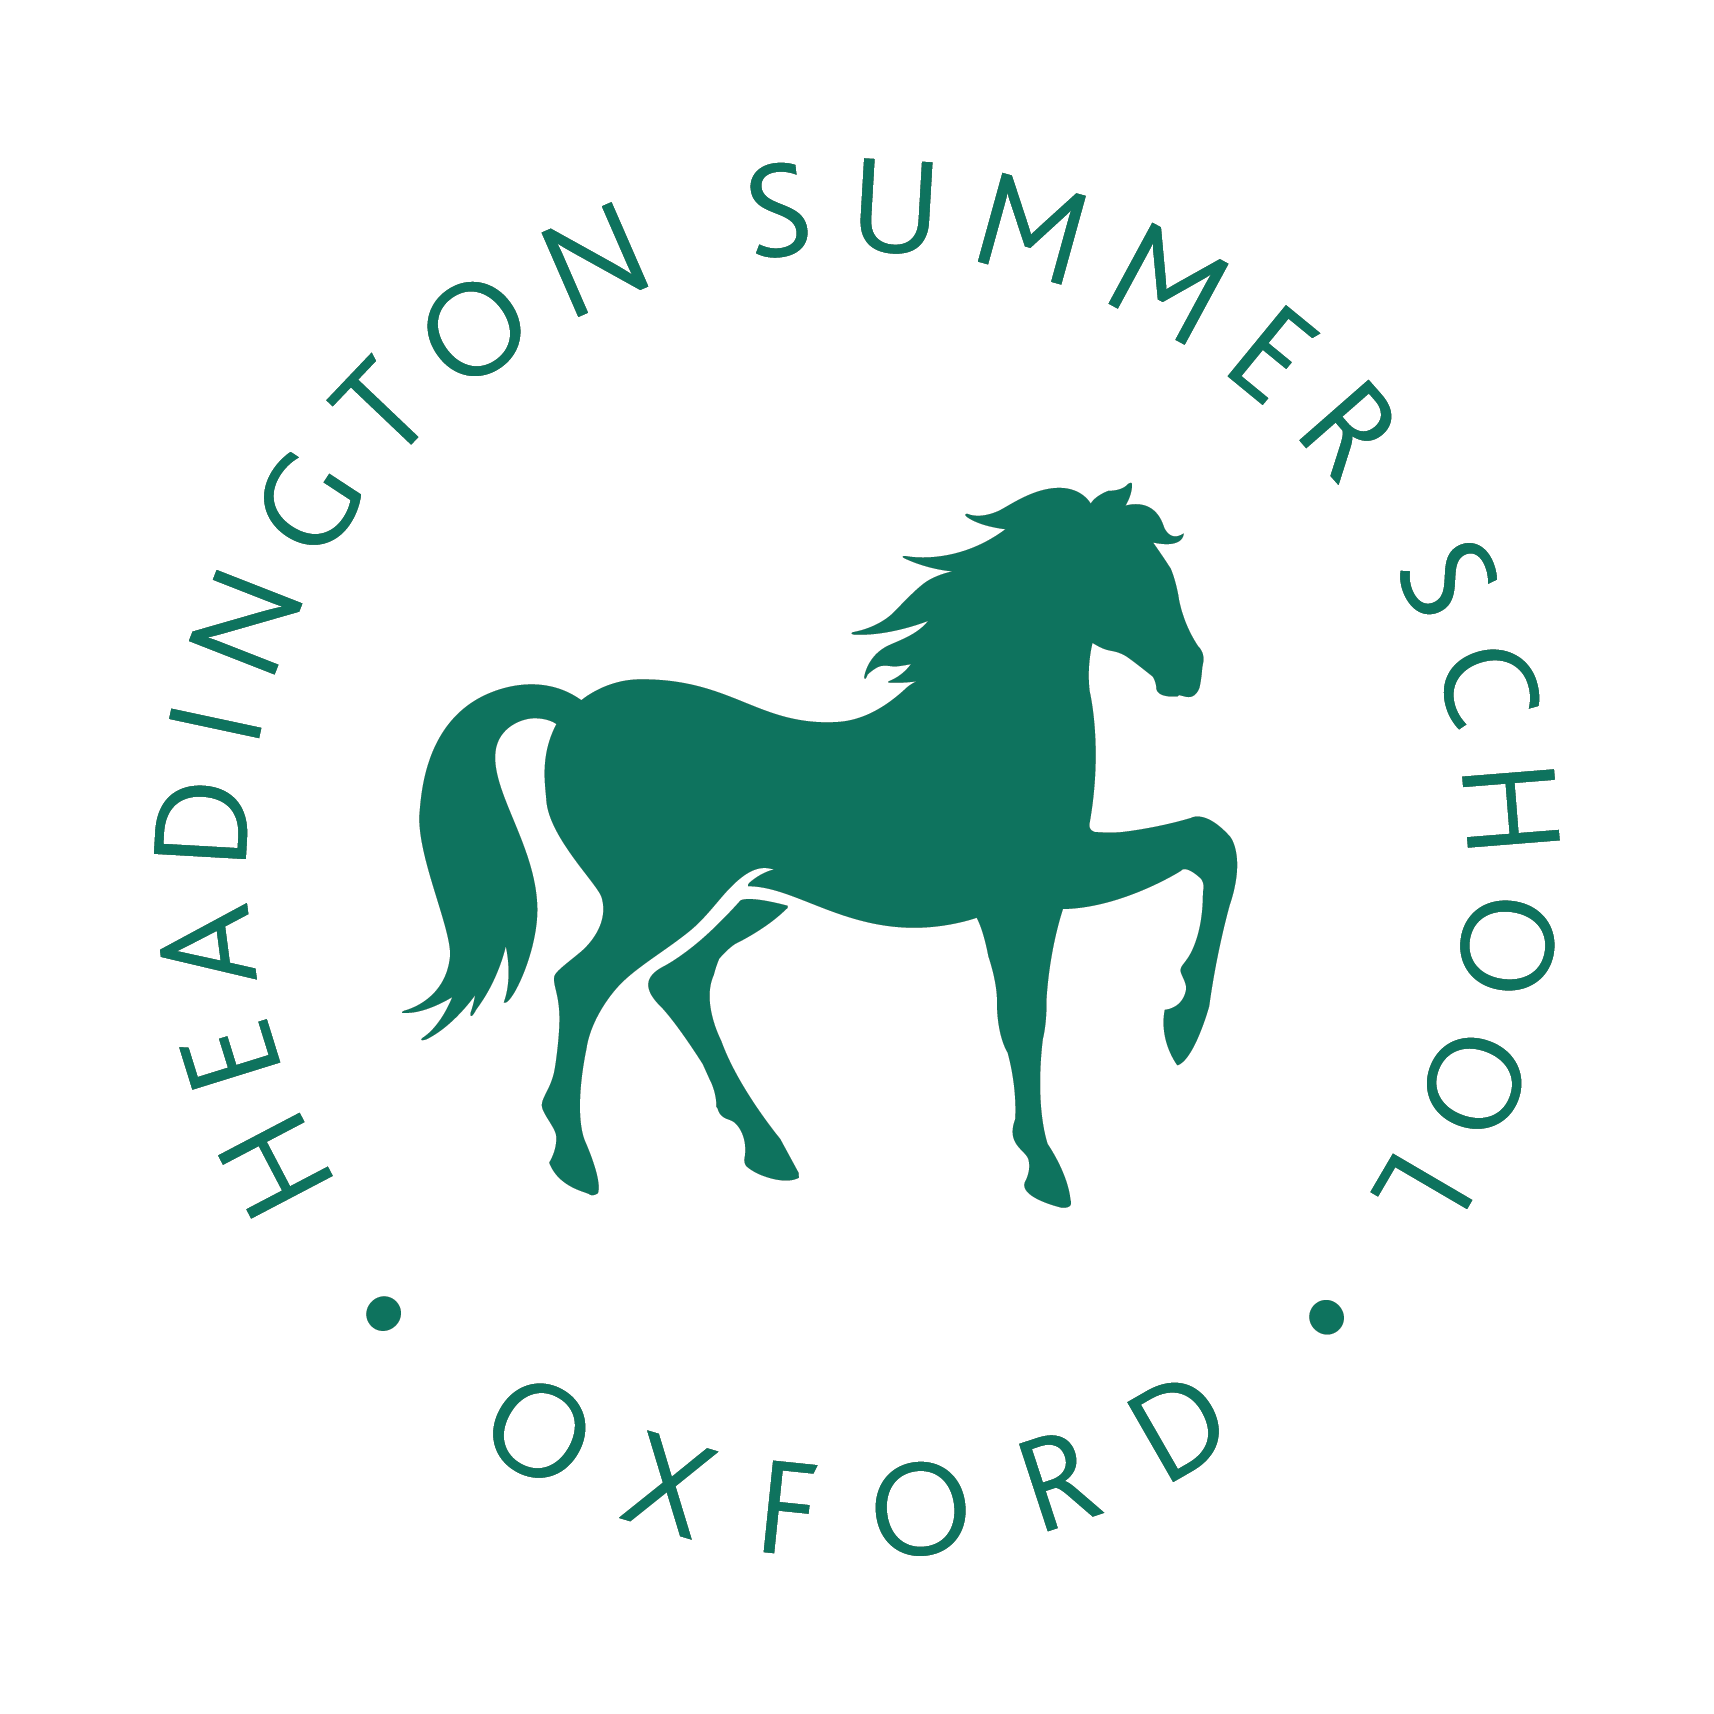 Green and White Circle Logo - Headington Green White Circle - Summer Boarding Courses